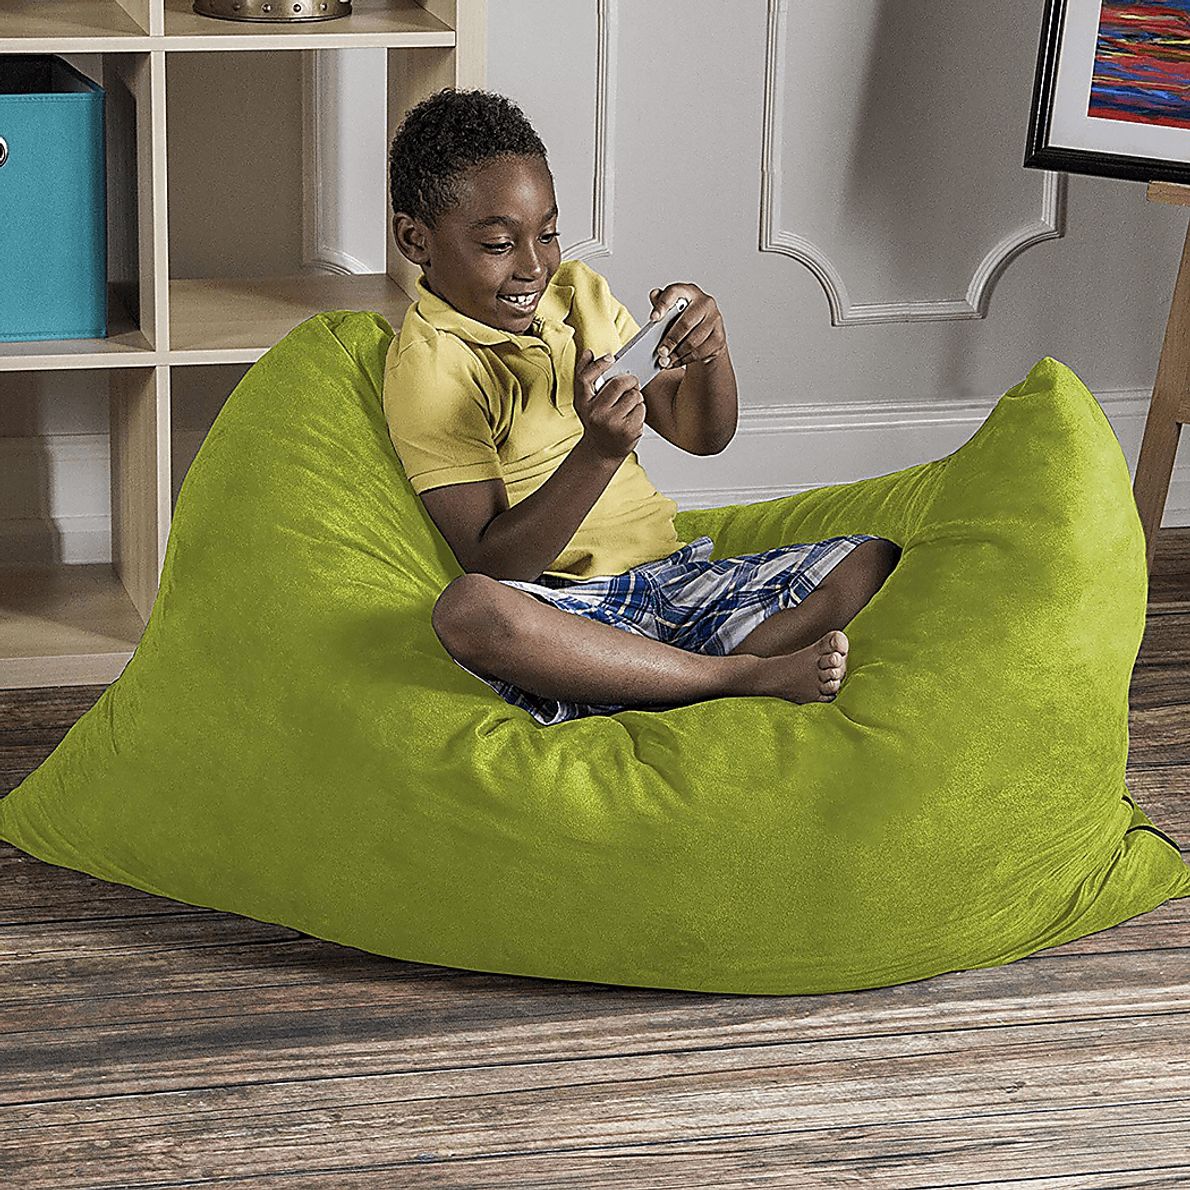 Kids Kiri Green Small Bean Bag Chair and Floor Pillow